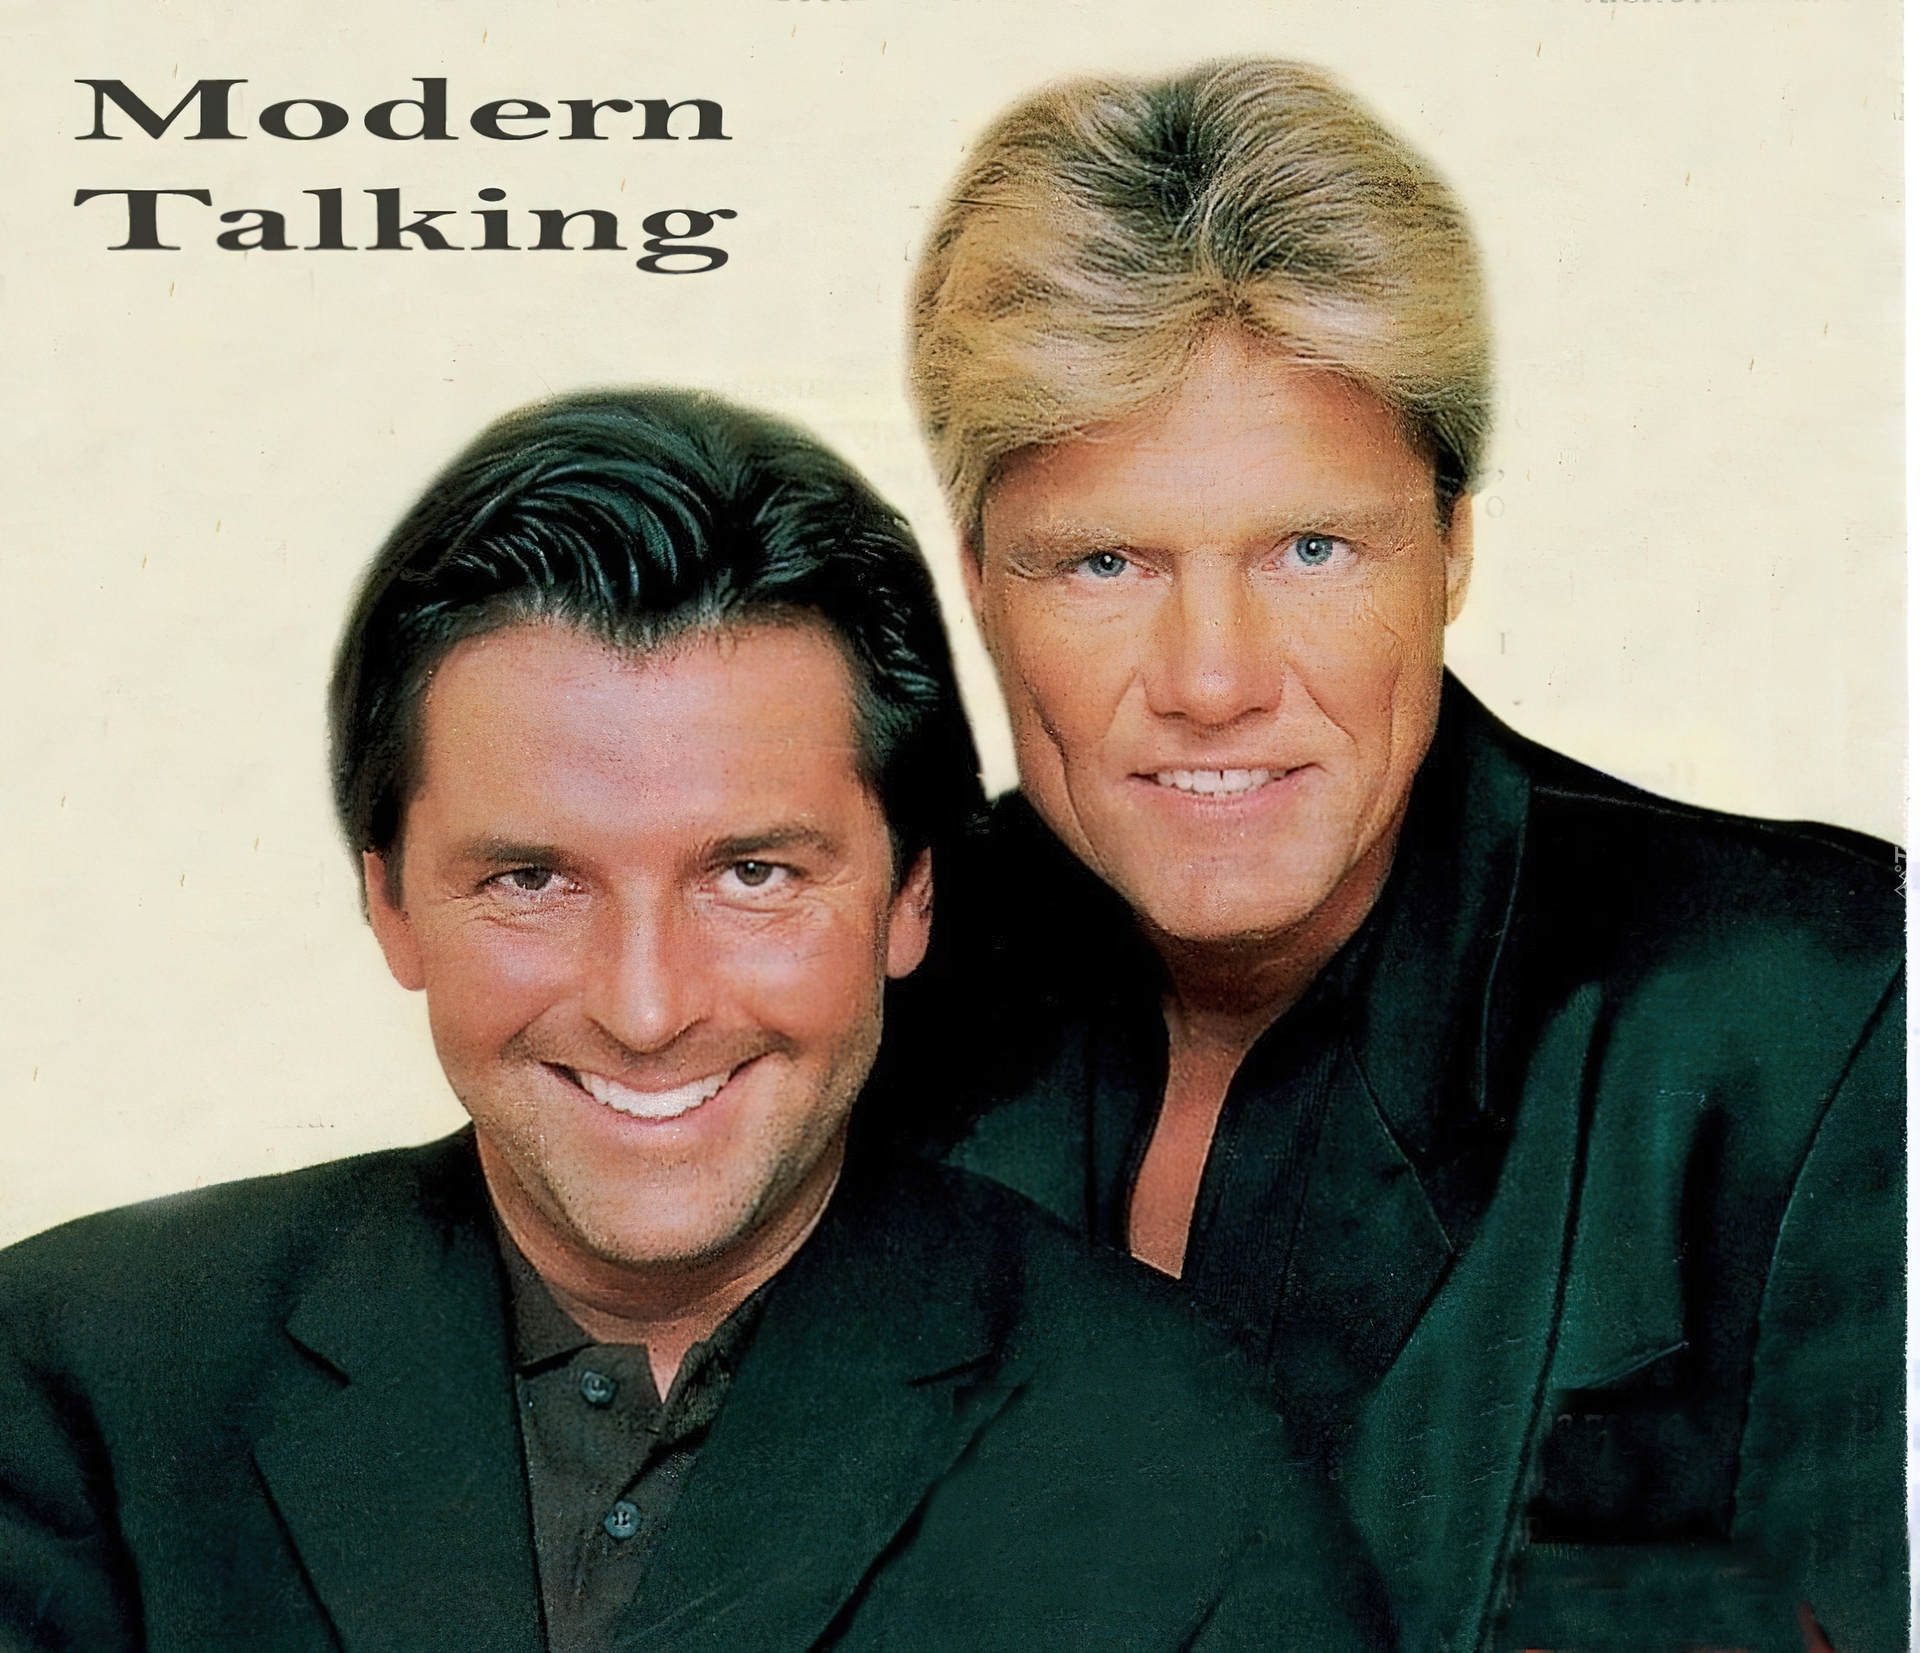 Моден токен песню слушать. Группа Modern talking. Группа Modern talking 2021. Modern talking 1996. Солист группы Modern talking.